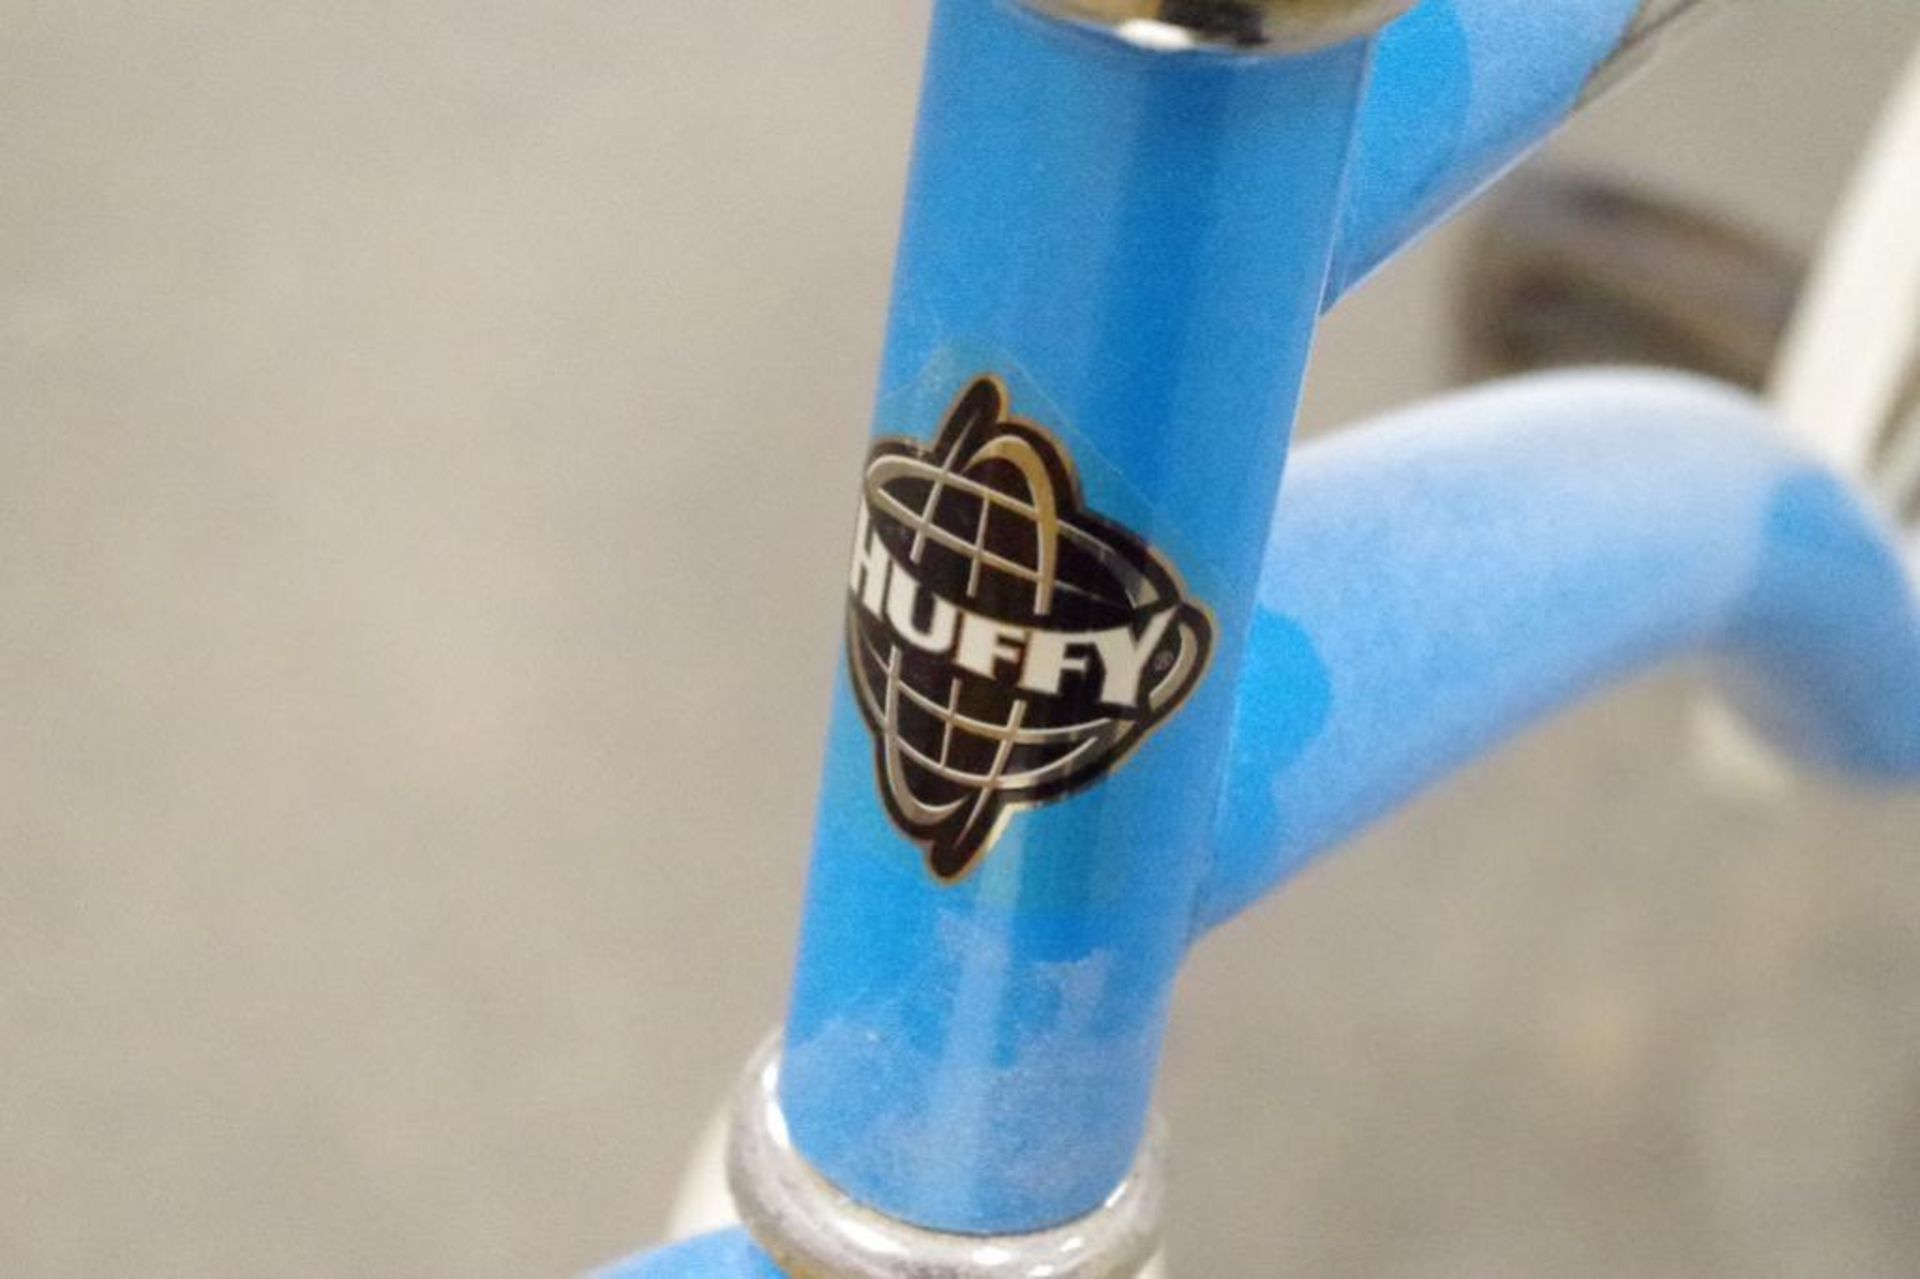 HUFFY Cranbrook Women's Cruiser Bike - Image 3 of 4